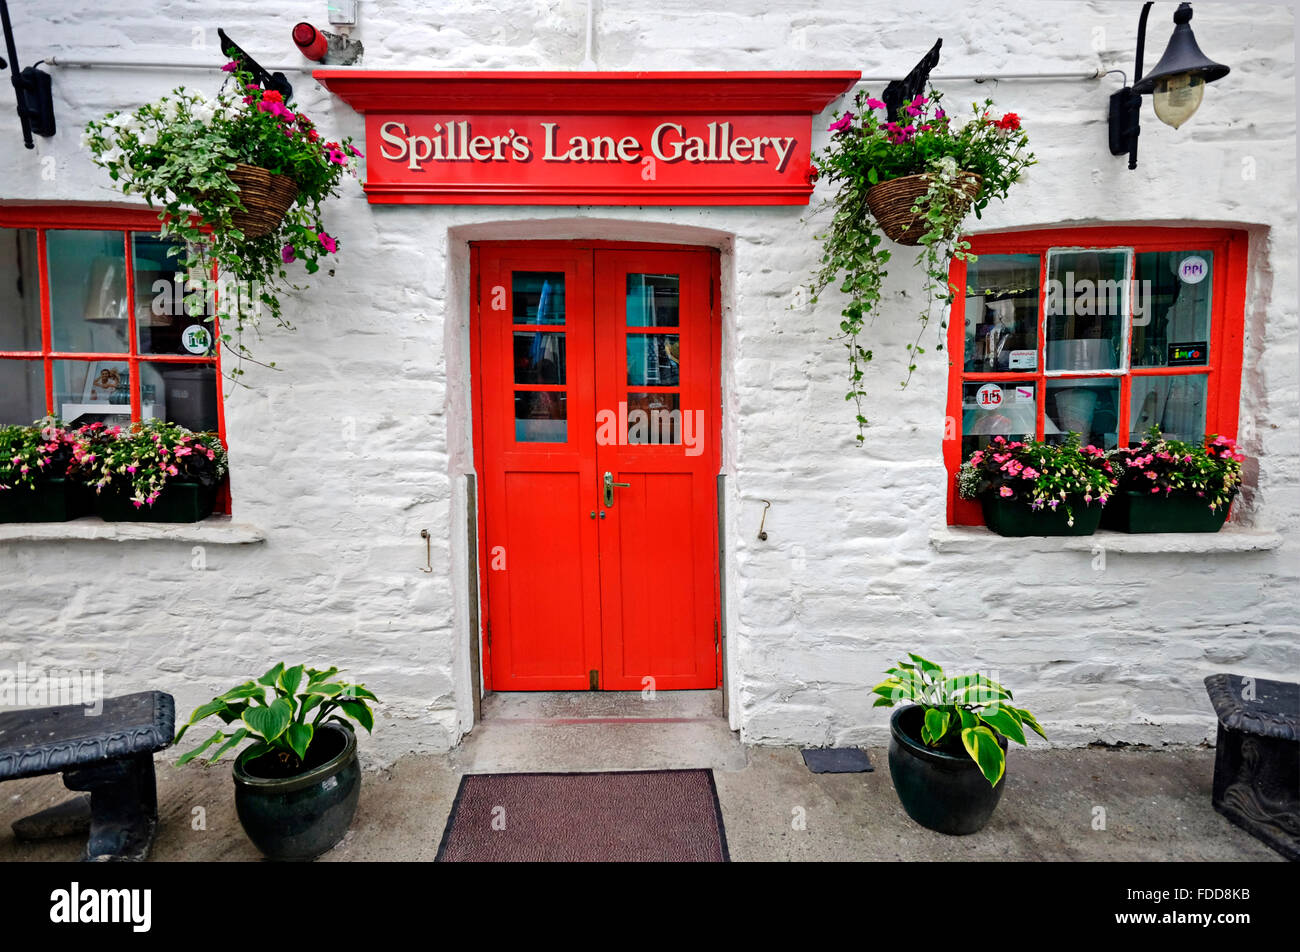 Spillers lane gallery Clonakilty West Cork Ireland, Stock Photo